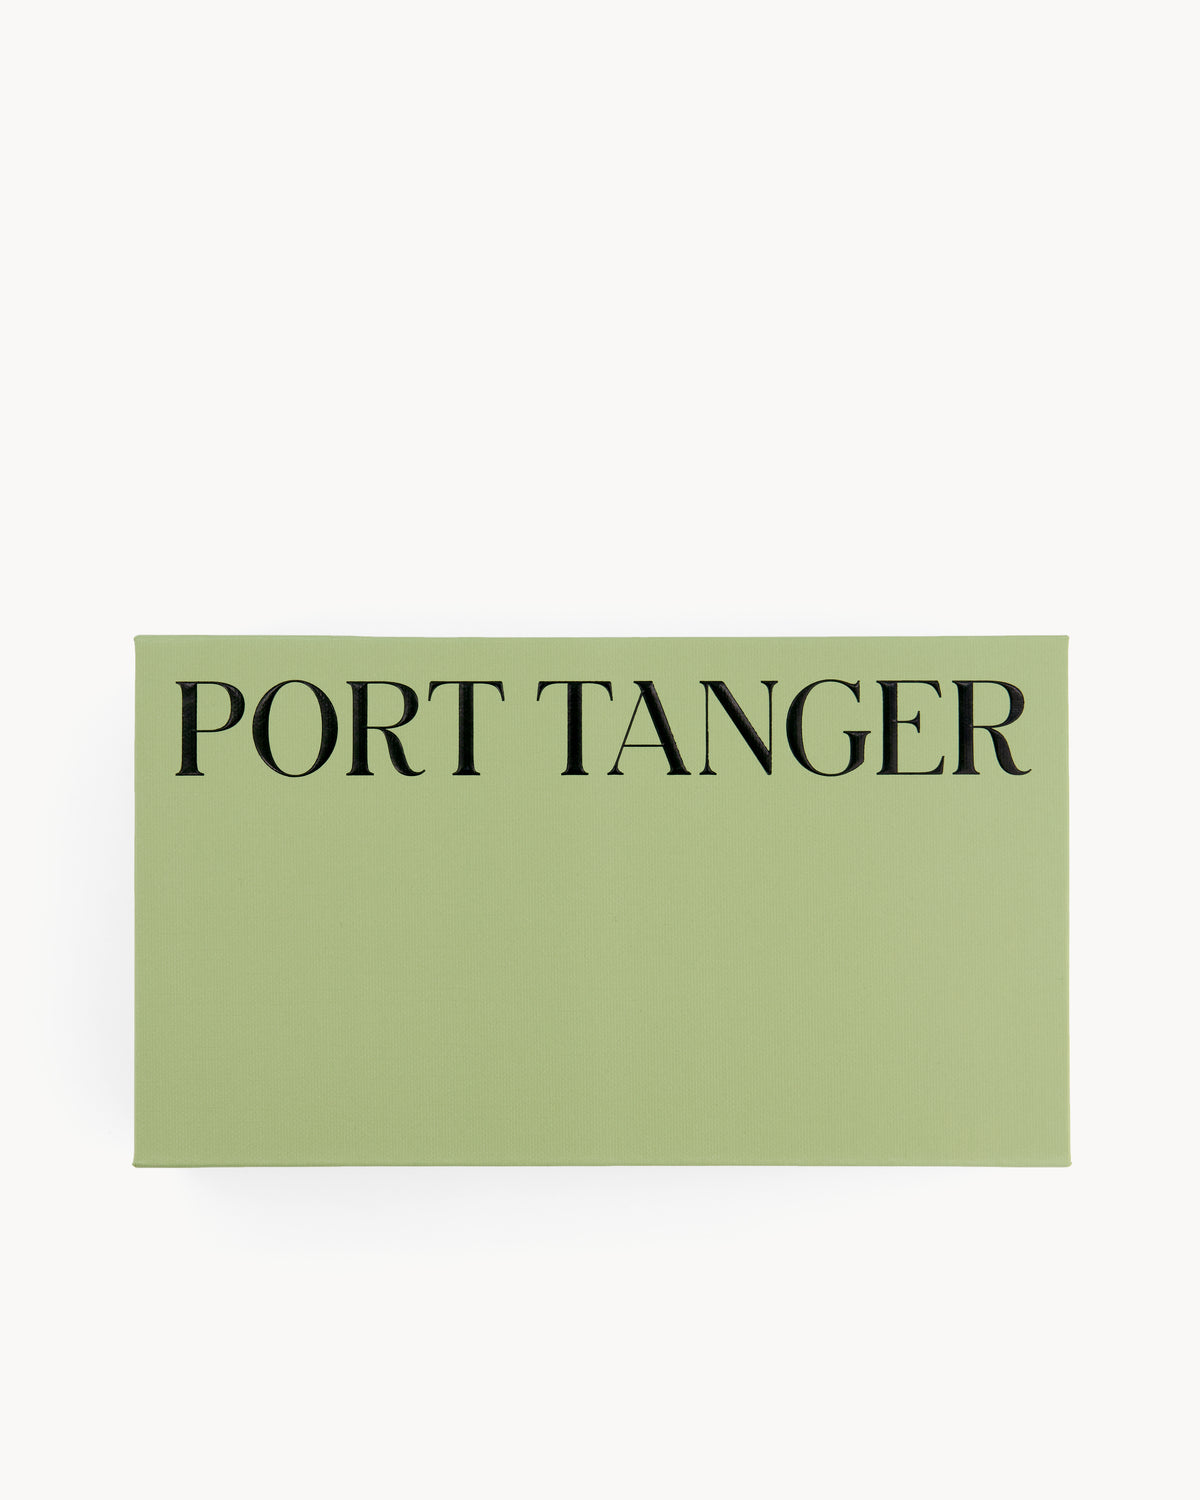 Port Tanger Ruh Sunglasses in Black acetate and Warm Olive Lenses 5